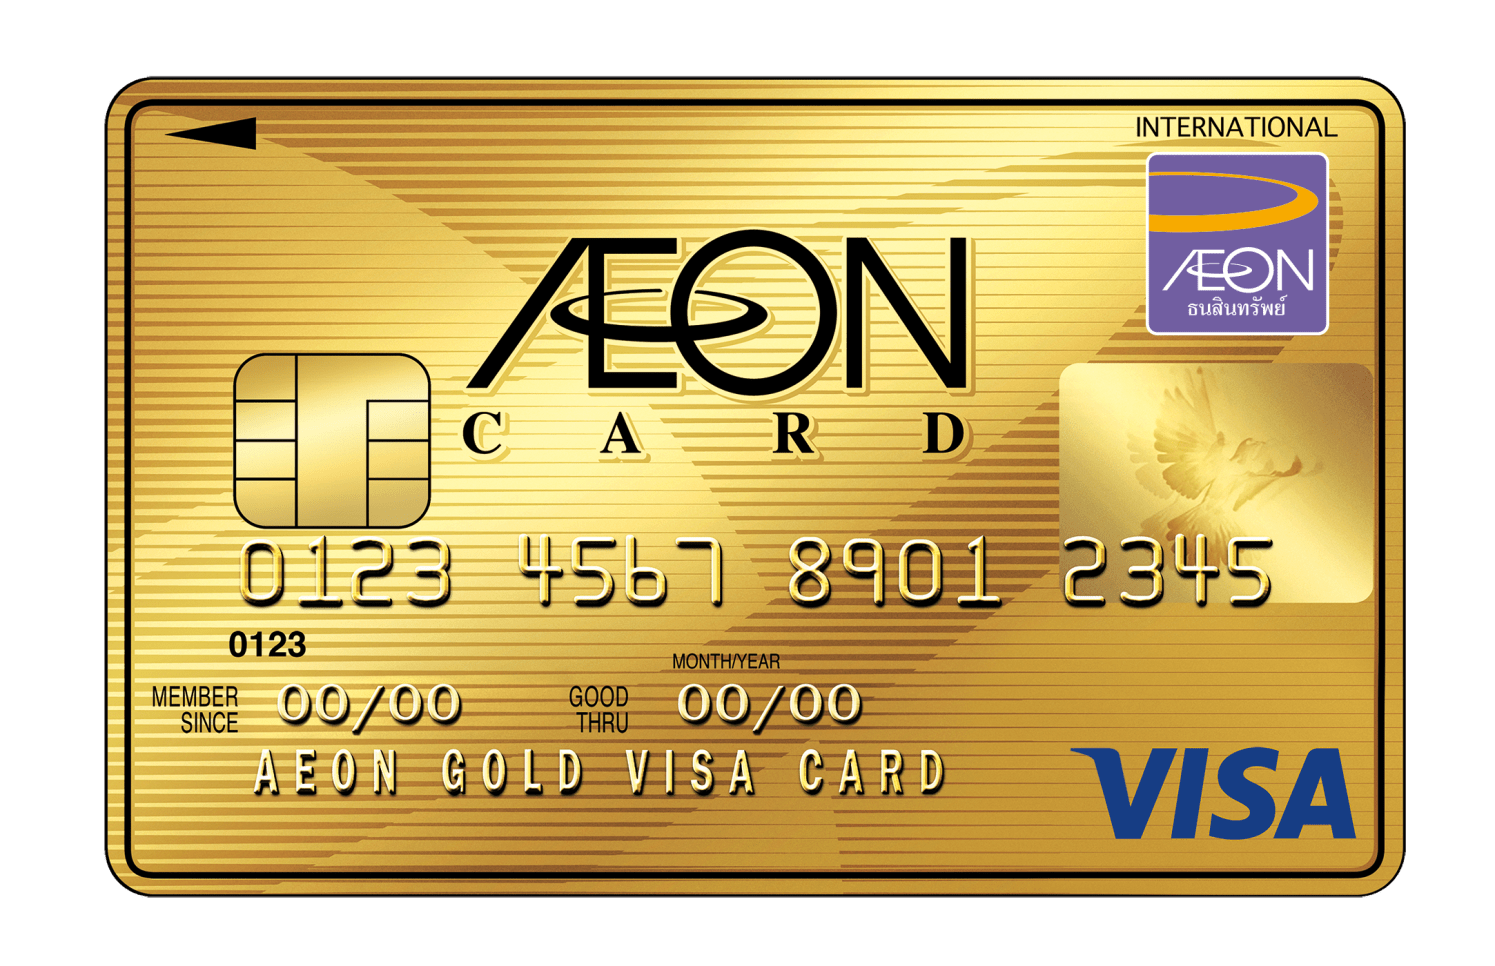  AEON Gold Visa